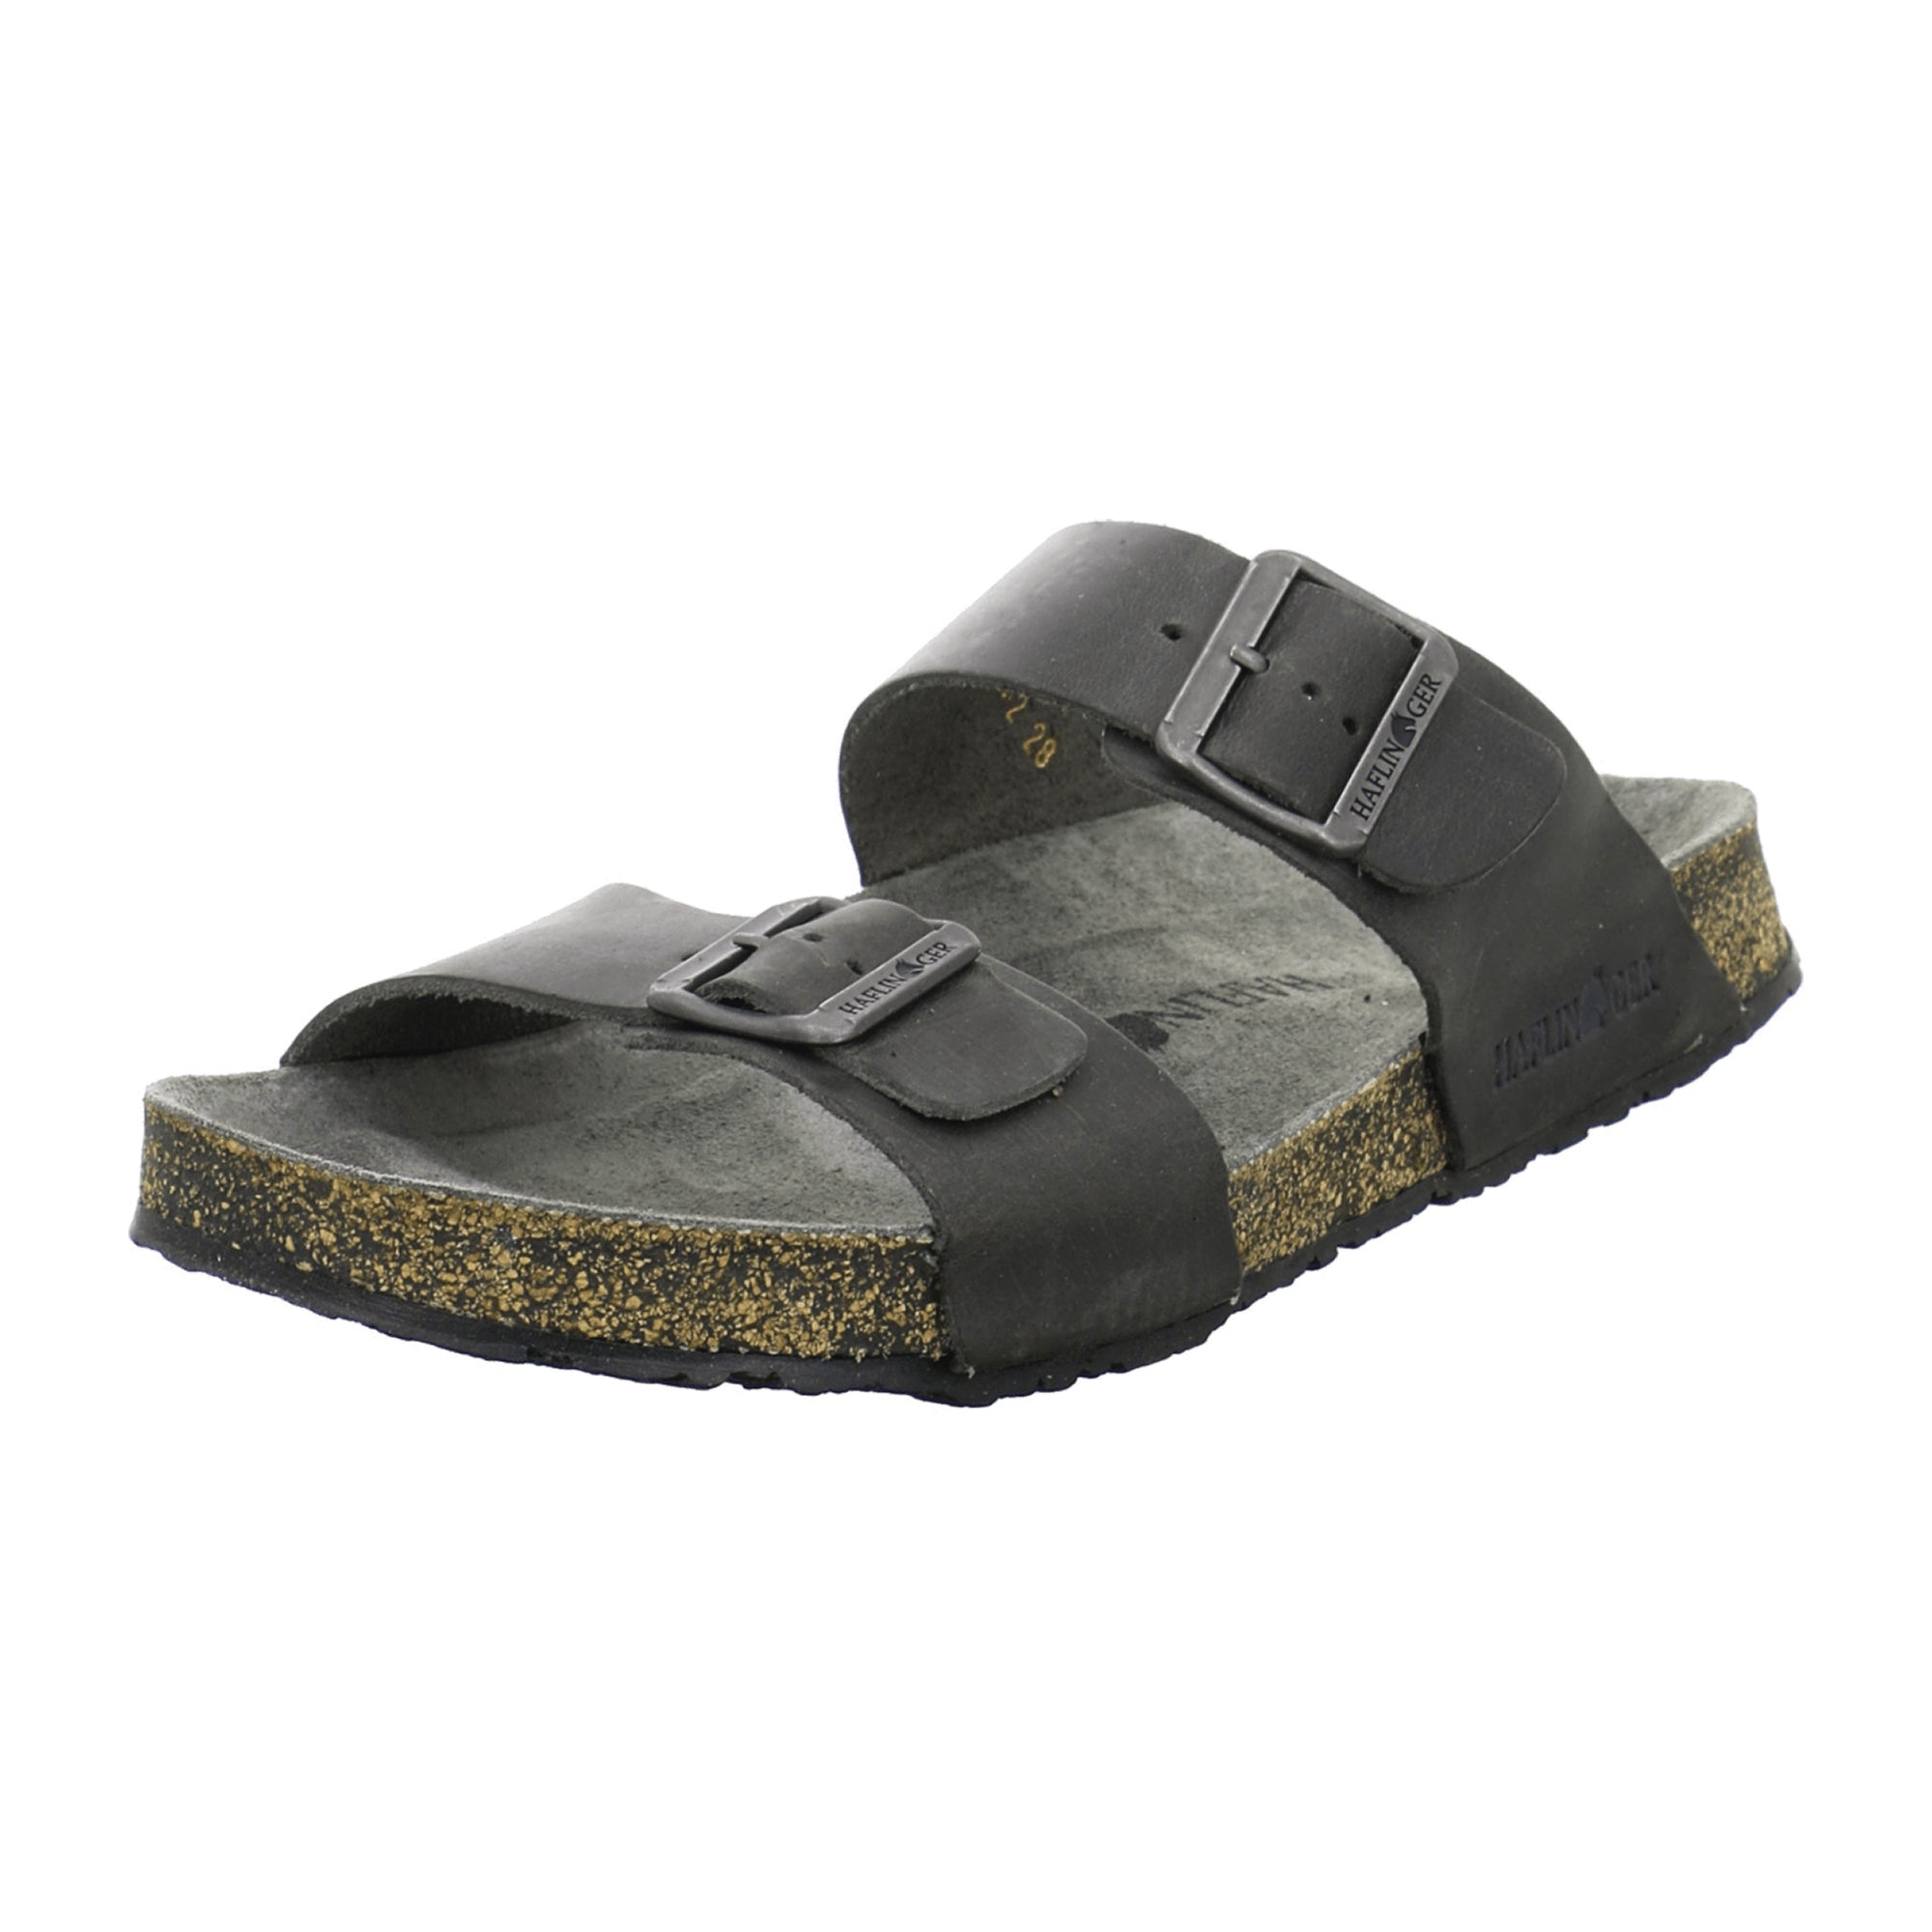 Haflinger Bio Andrea Women's Black Sandals - Eco-Friendly, Stylish & Comfortable